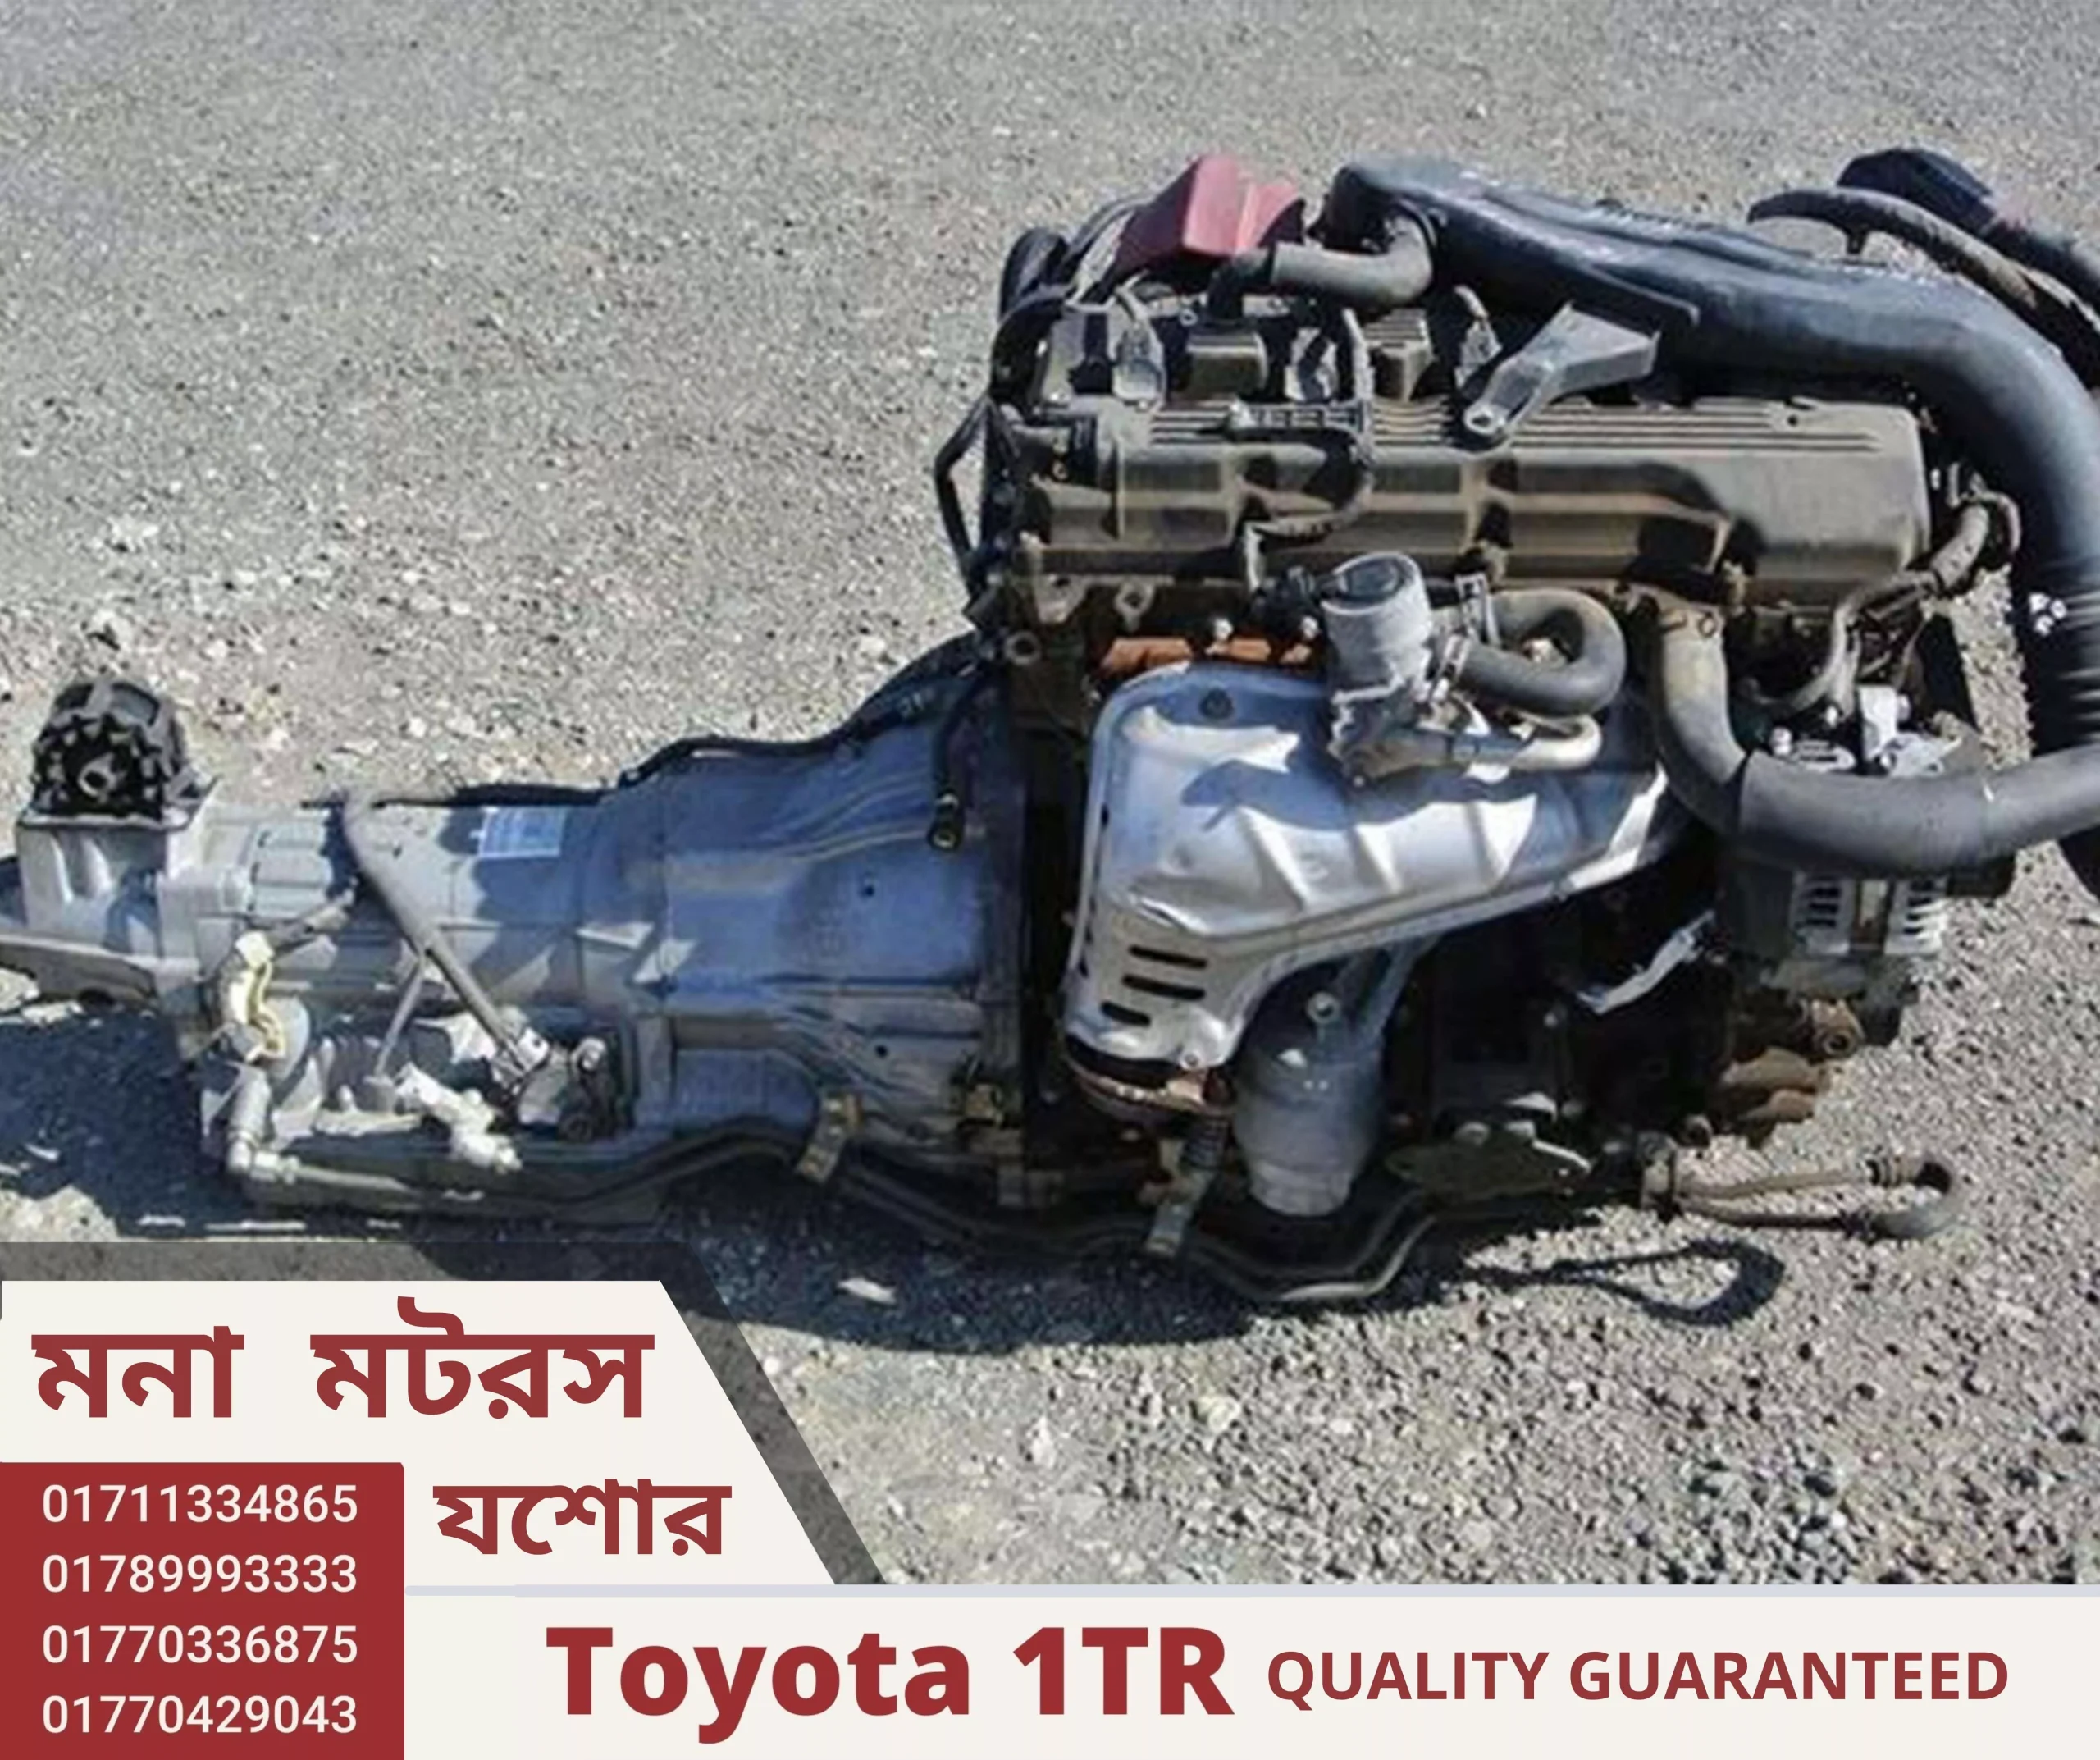 Toyota 1TR scaled